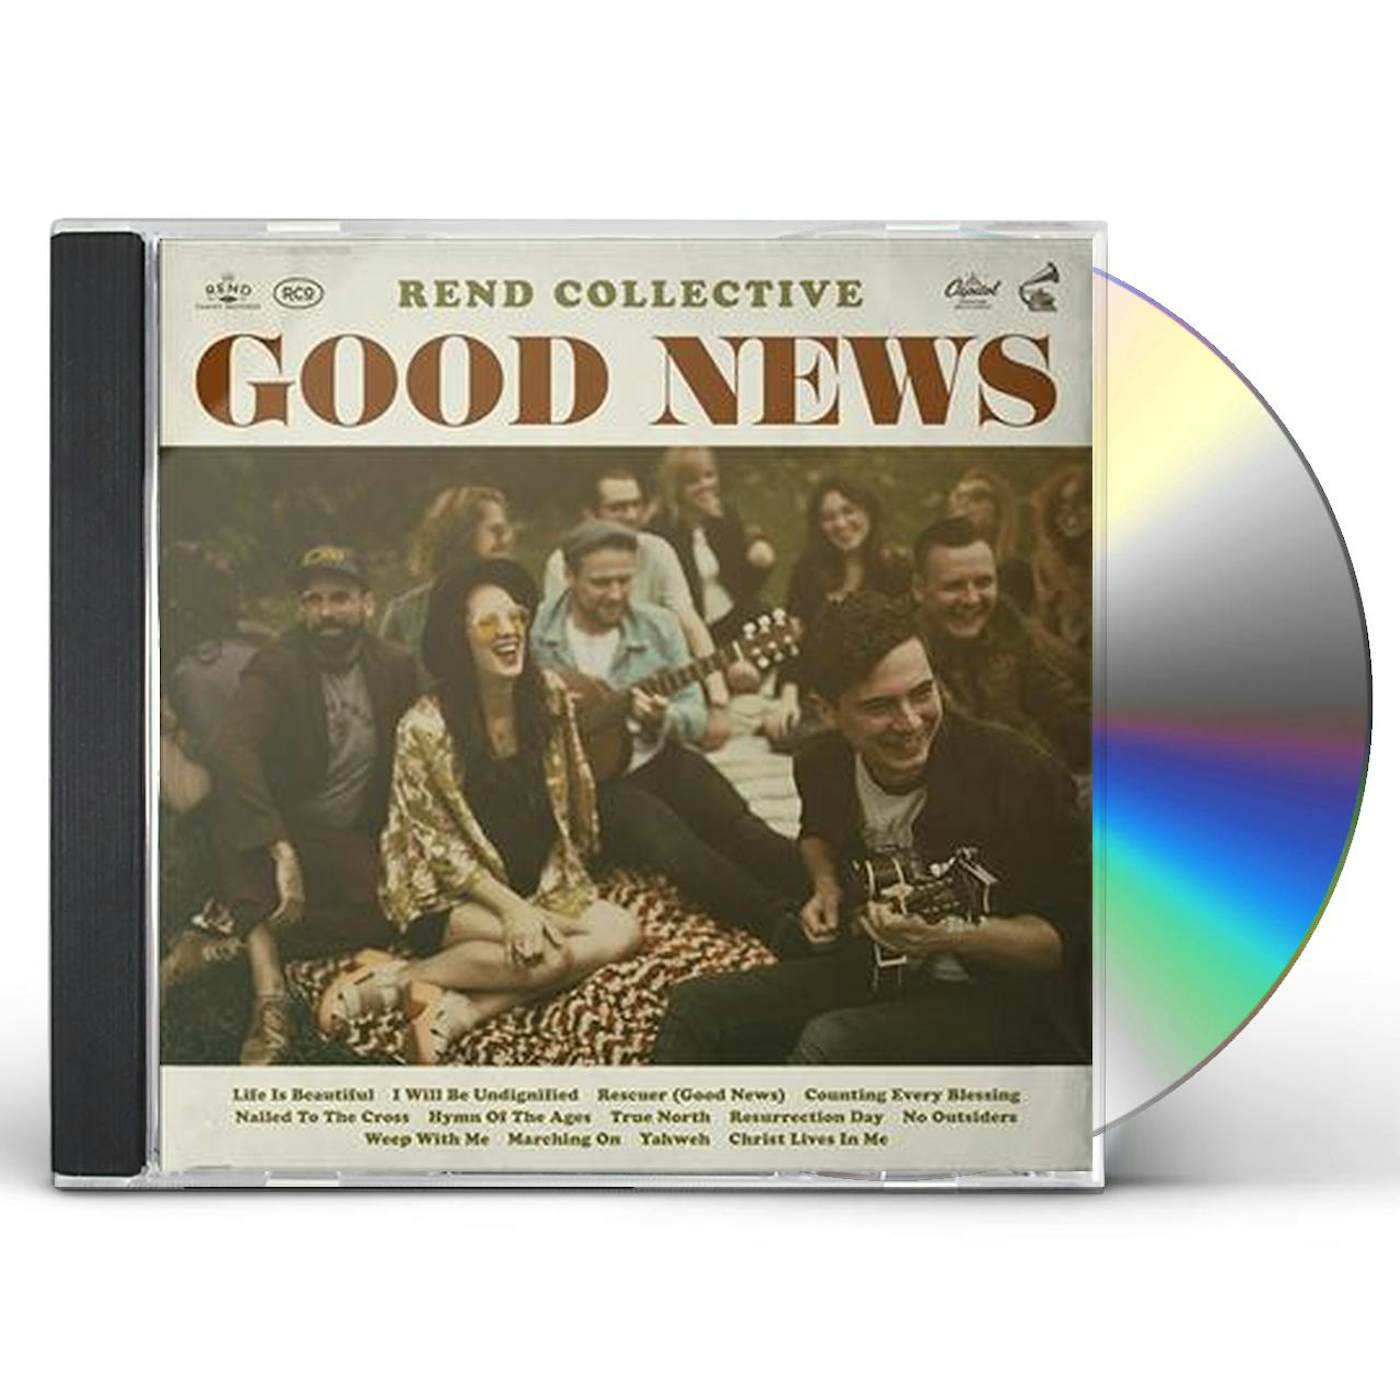 Rend Collective GOOD NEWS CD